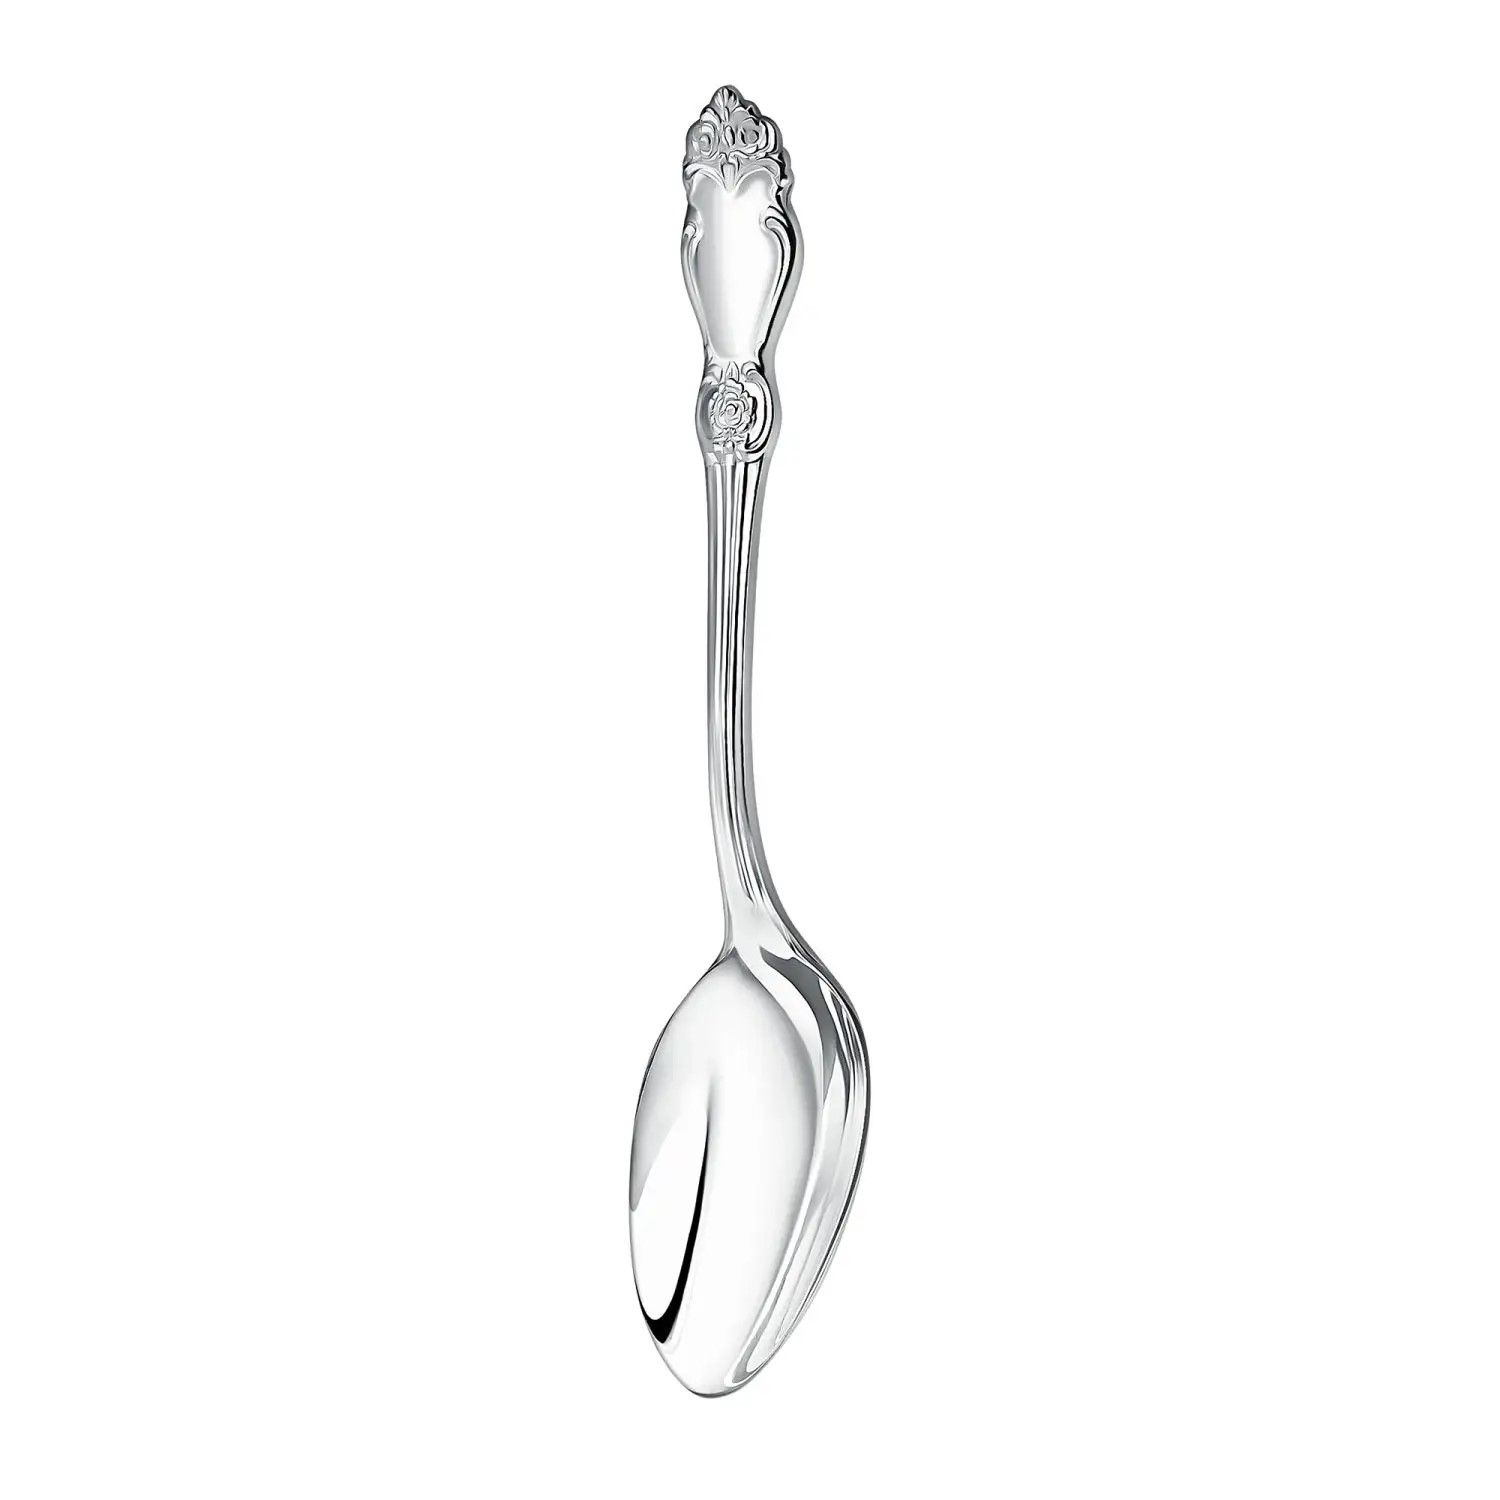 Nickel Silver Dessert Spoons